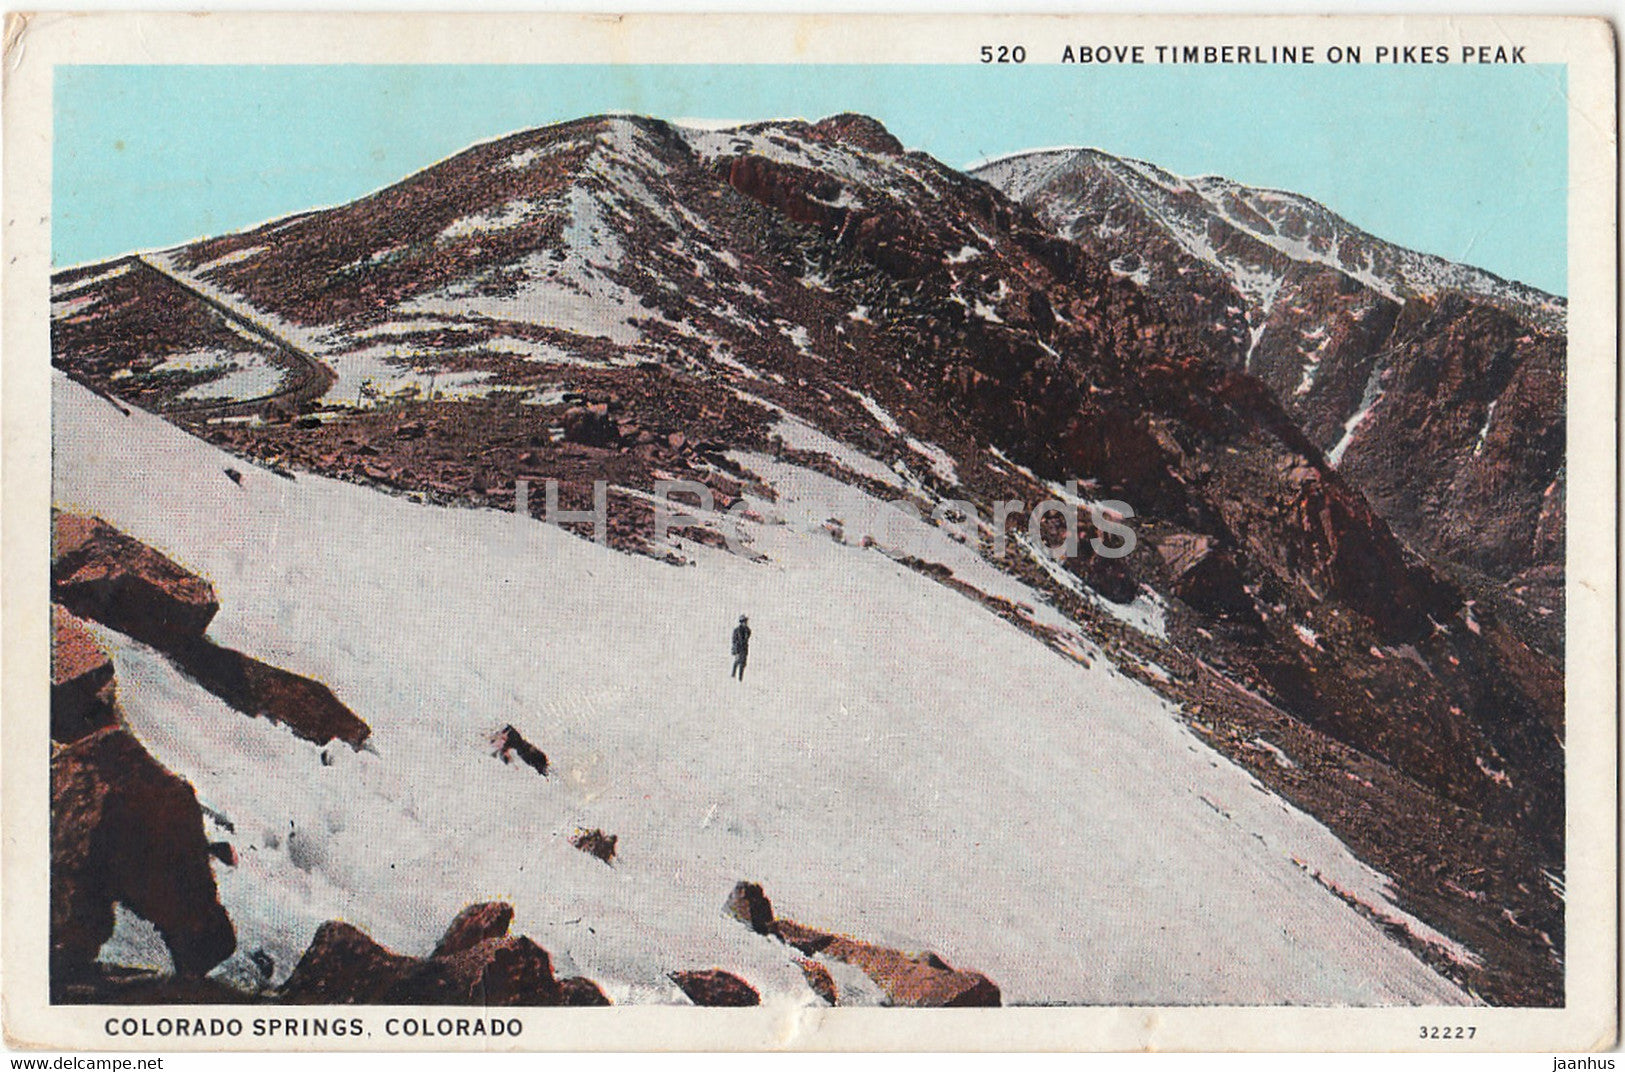 Colorado Springs - Above Timberline on Pikes Peak - 32227 - old postcard - 1932 - United States USA - used - JH Postcards